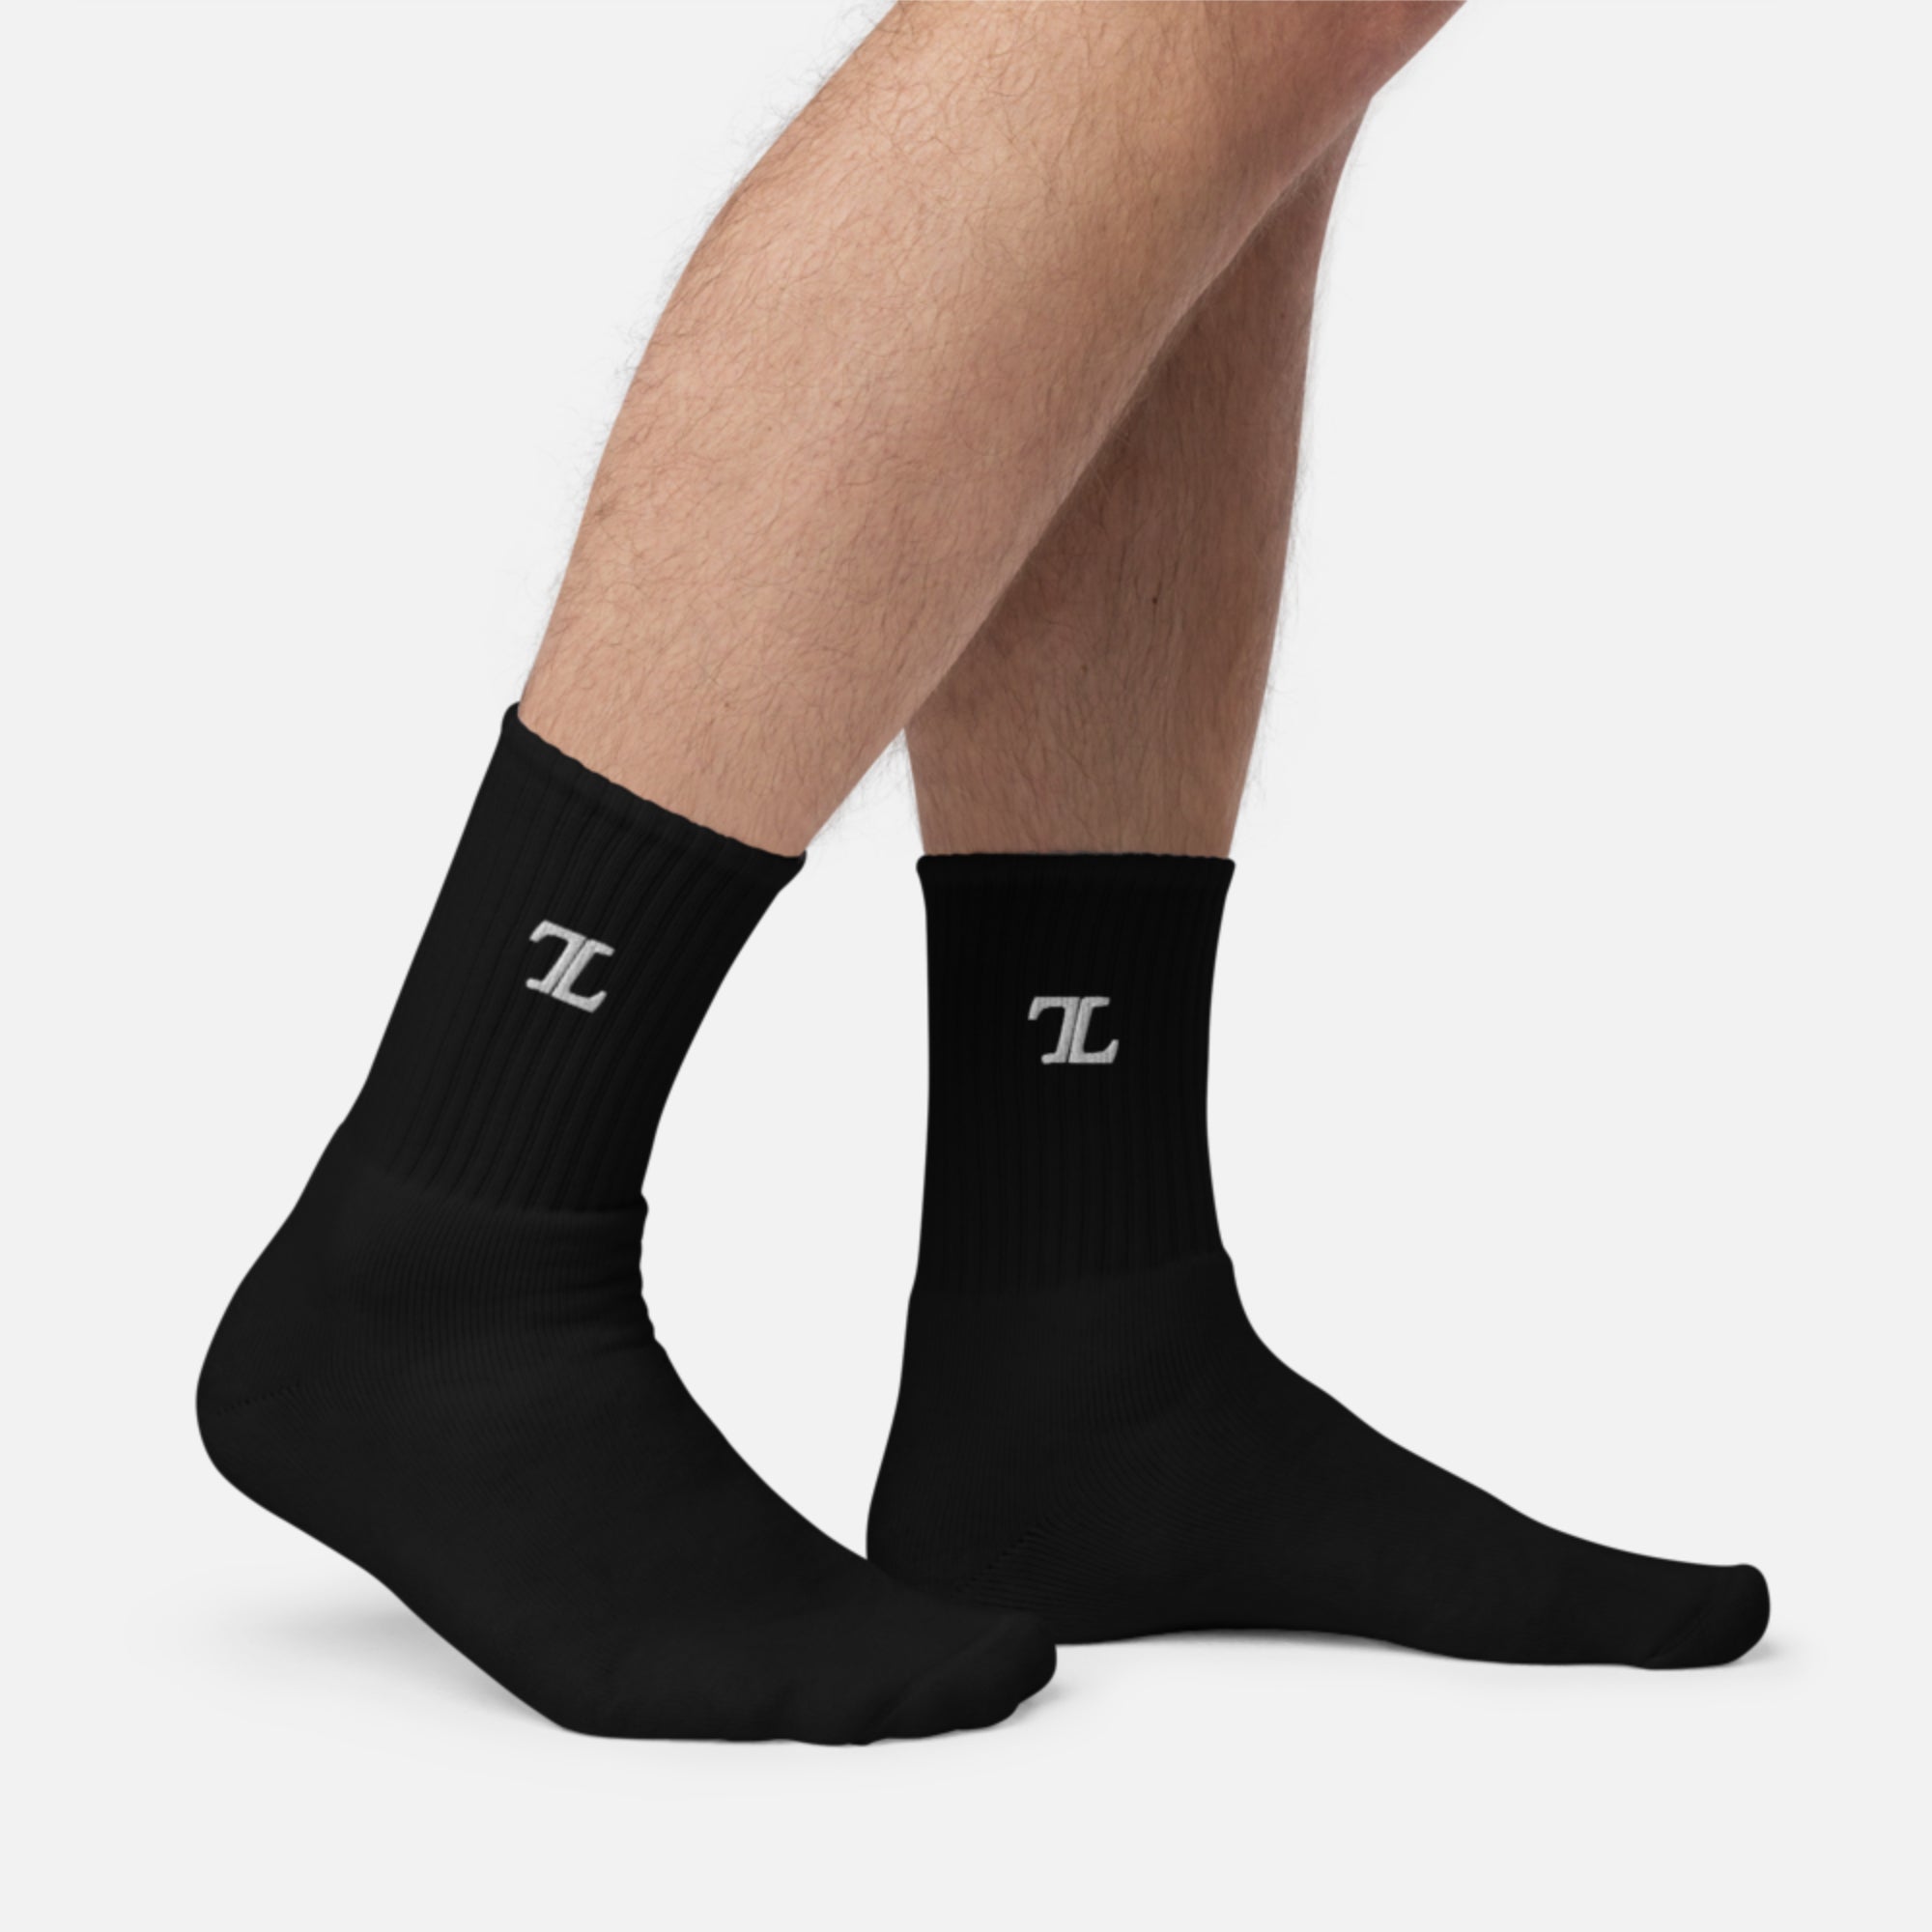 TL Genesis Socks - Black